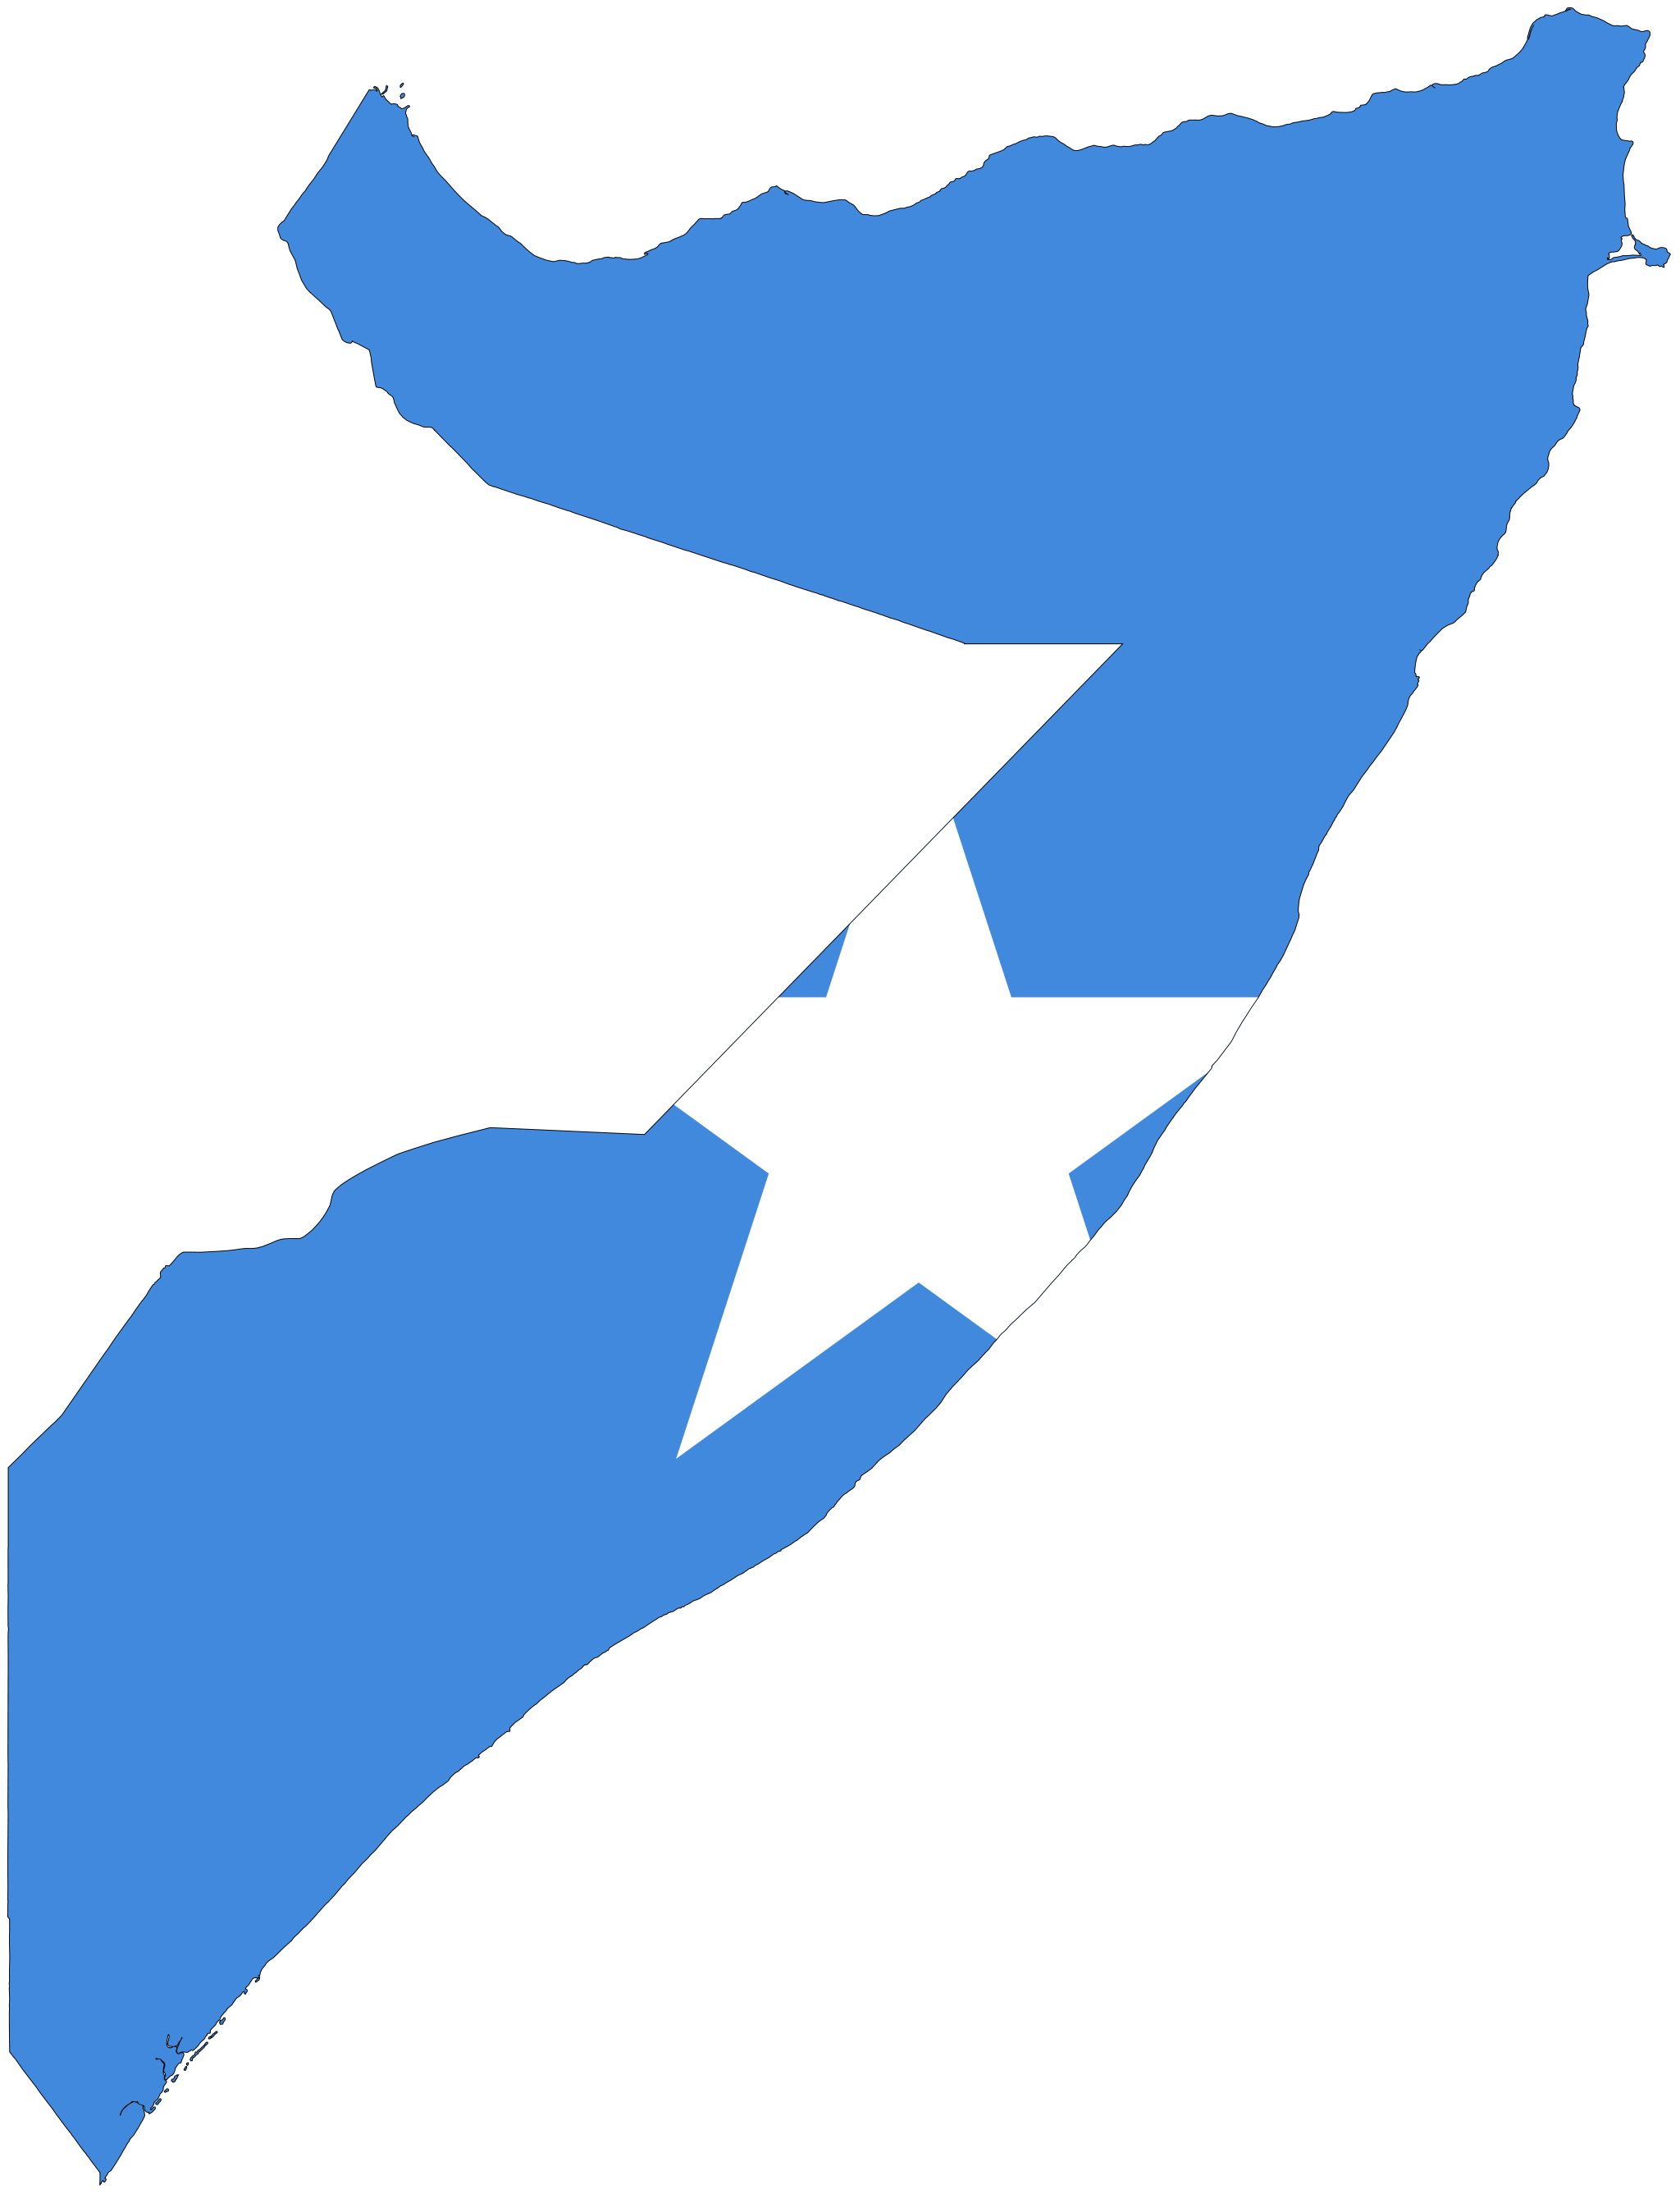 Somalia_flag_map.png